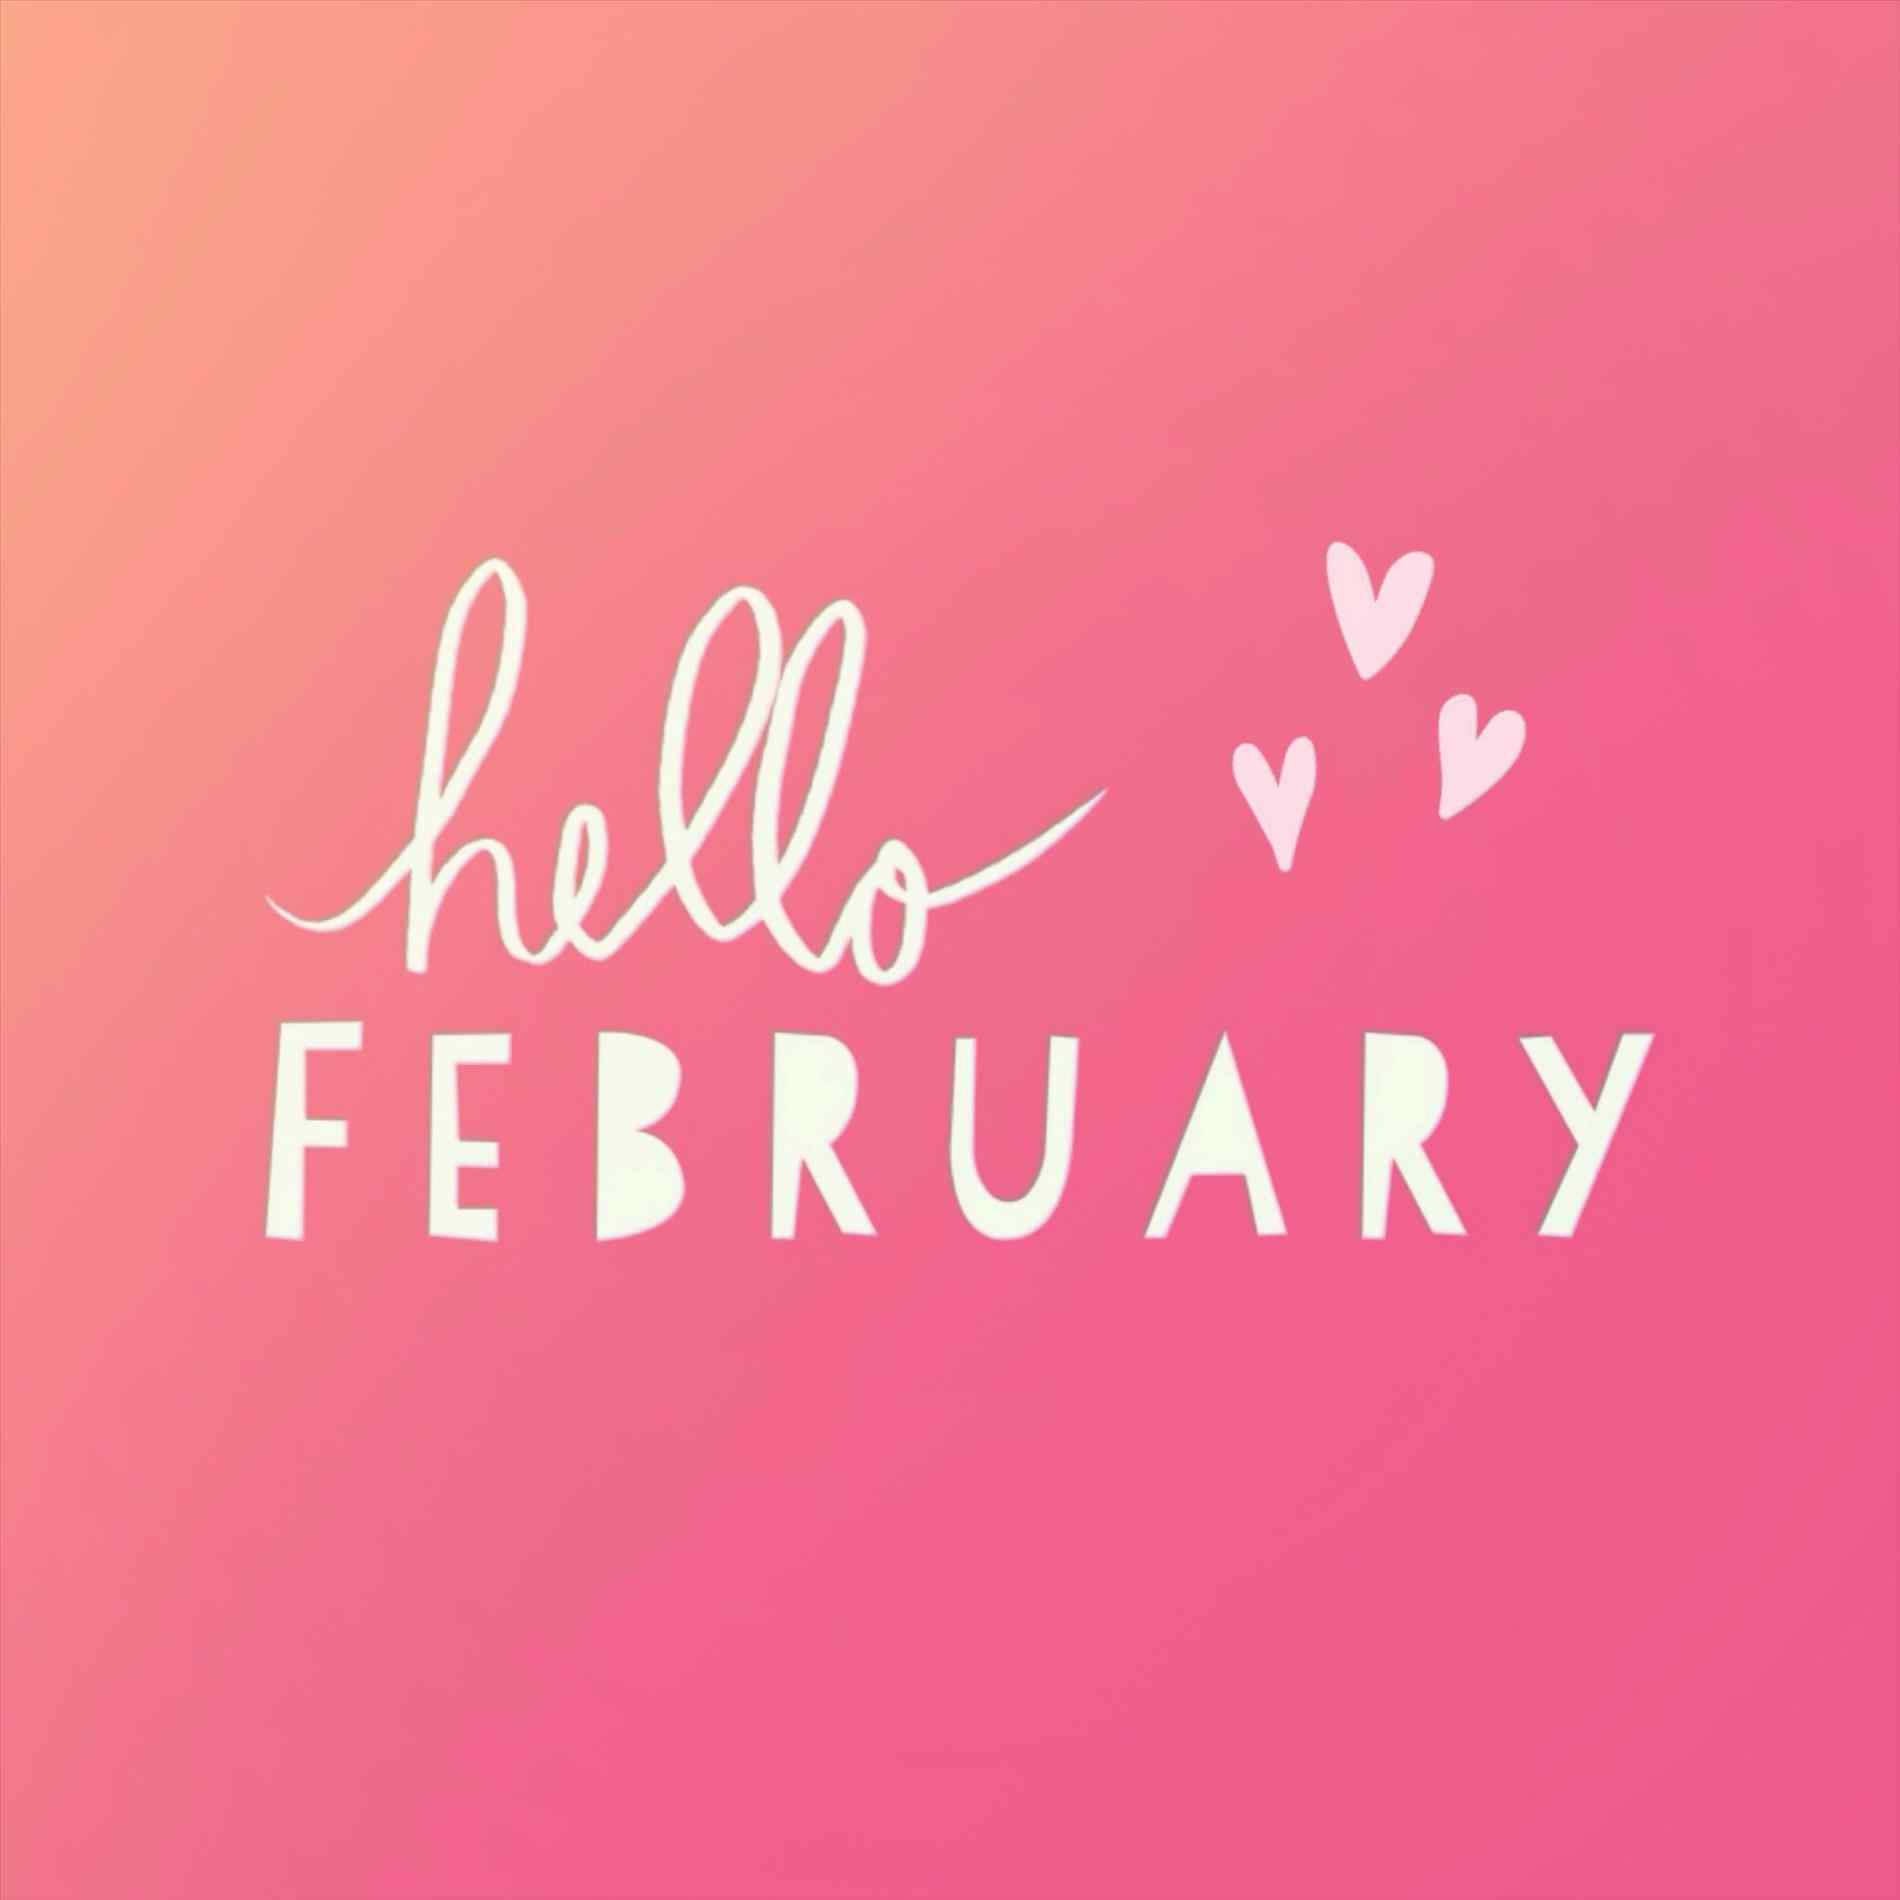 A hello february greeting card - February